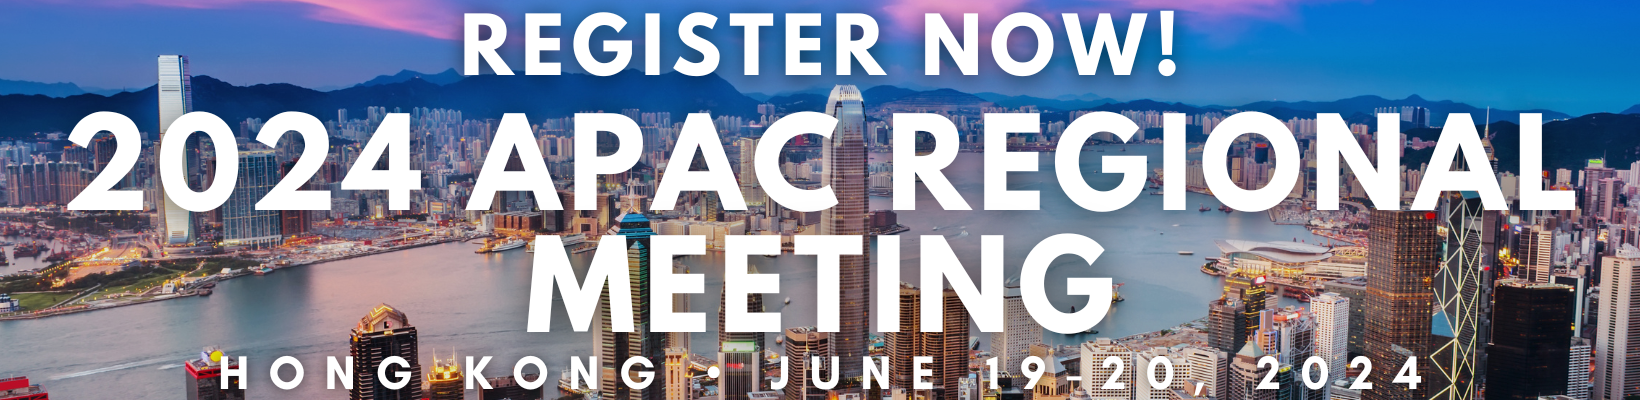 2024 APAC Regional Meeting - June 19-20